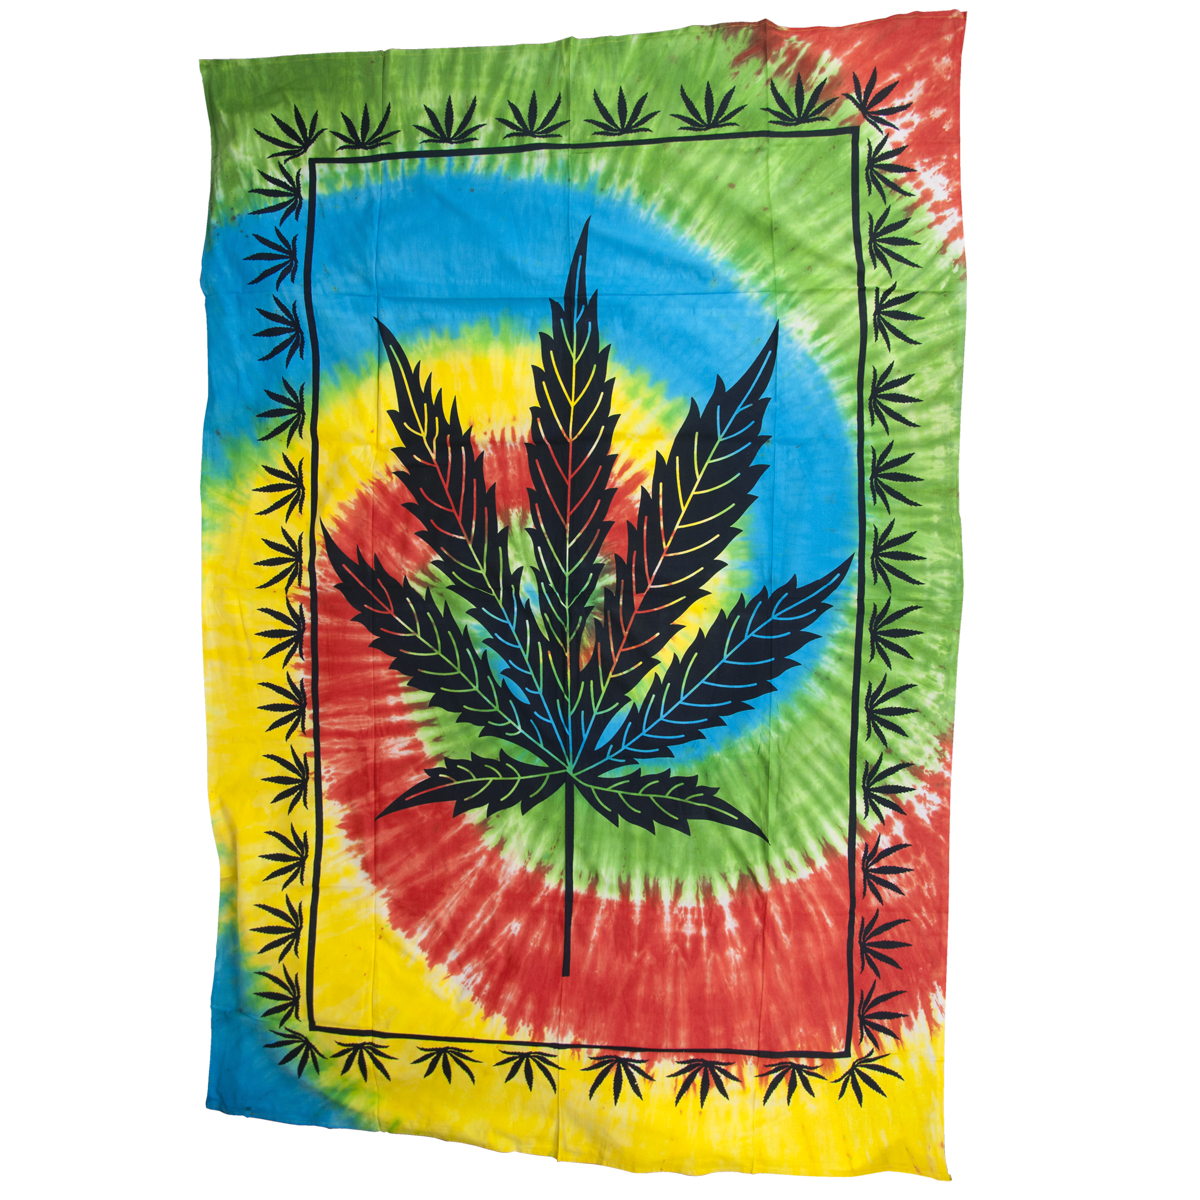 Details about   Tie Dye Peace Marijuana Leaf Flag 3x5ft 420 Mj flag Tie Dye Hippy Pot Weed Flag